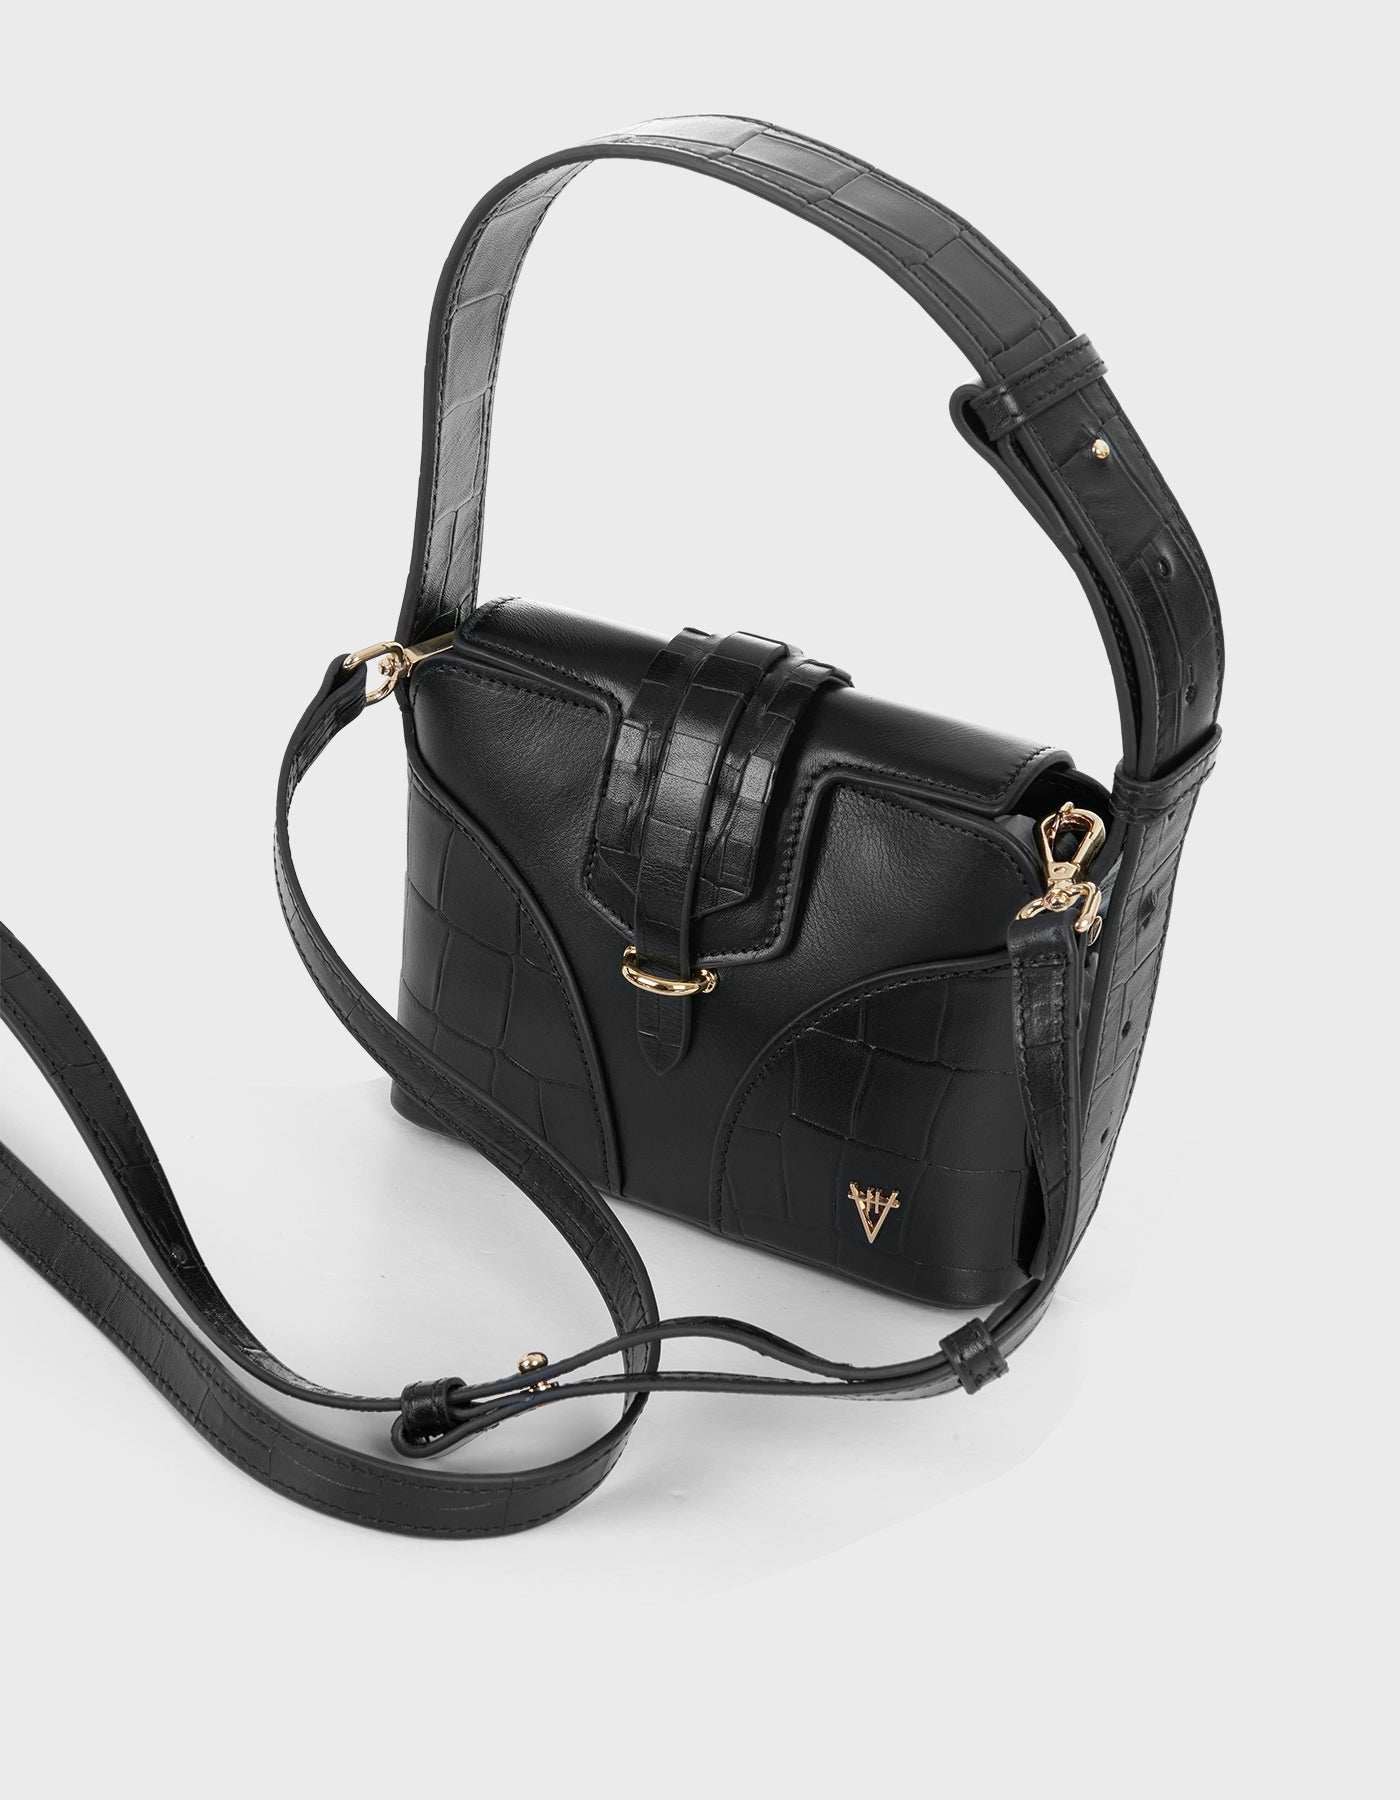 Luna Shoulder Bag - Finest Quality HiVa Atelier GmbH Leather Accessories